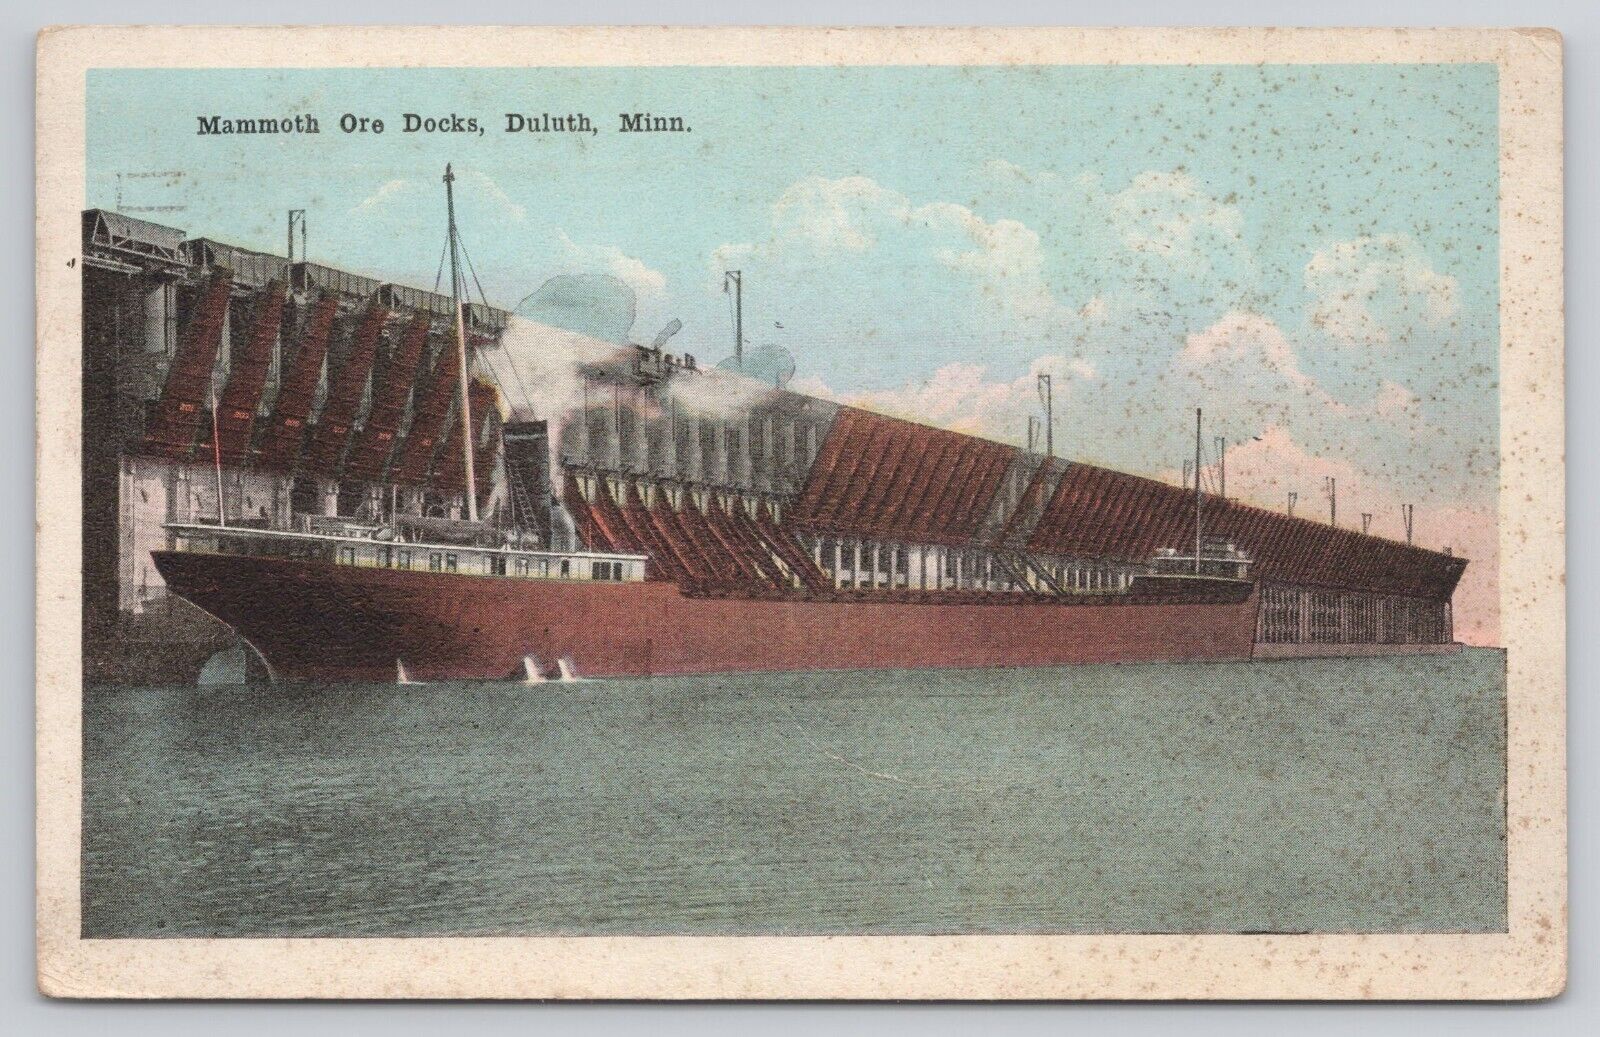 Mammoth Ore Docks Freighter Steamship Docked Duluth MN Minnesota c1920 Postcard